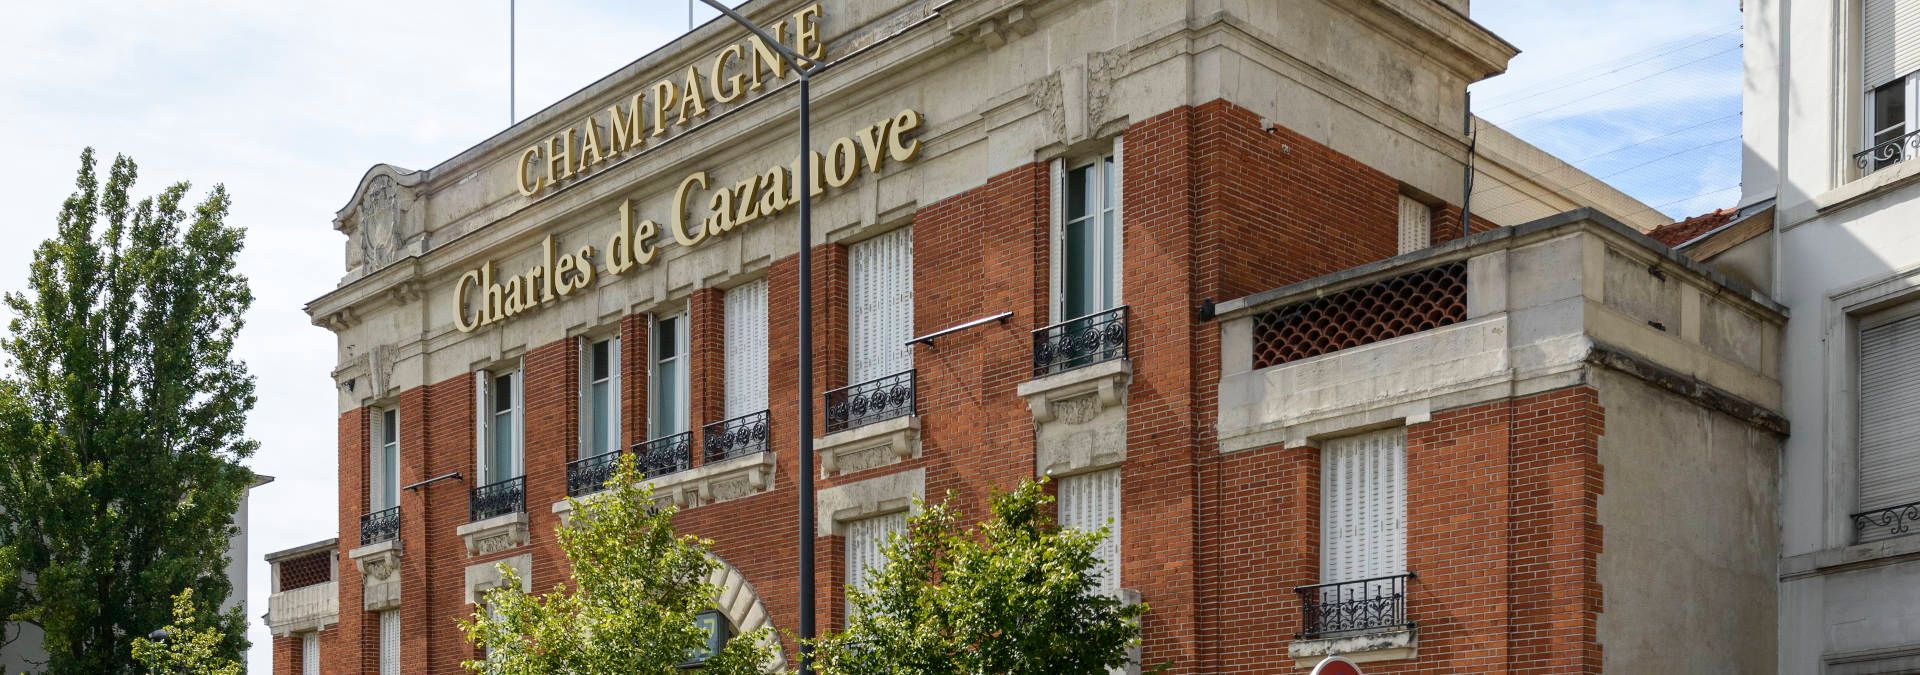 Champagne Charles de Cazanove - Rue des Vignerons